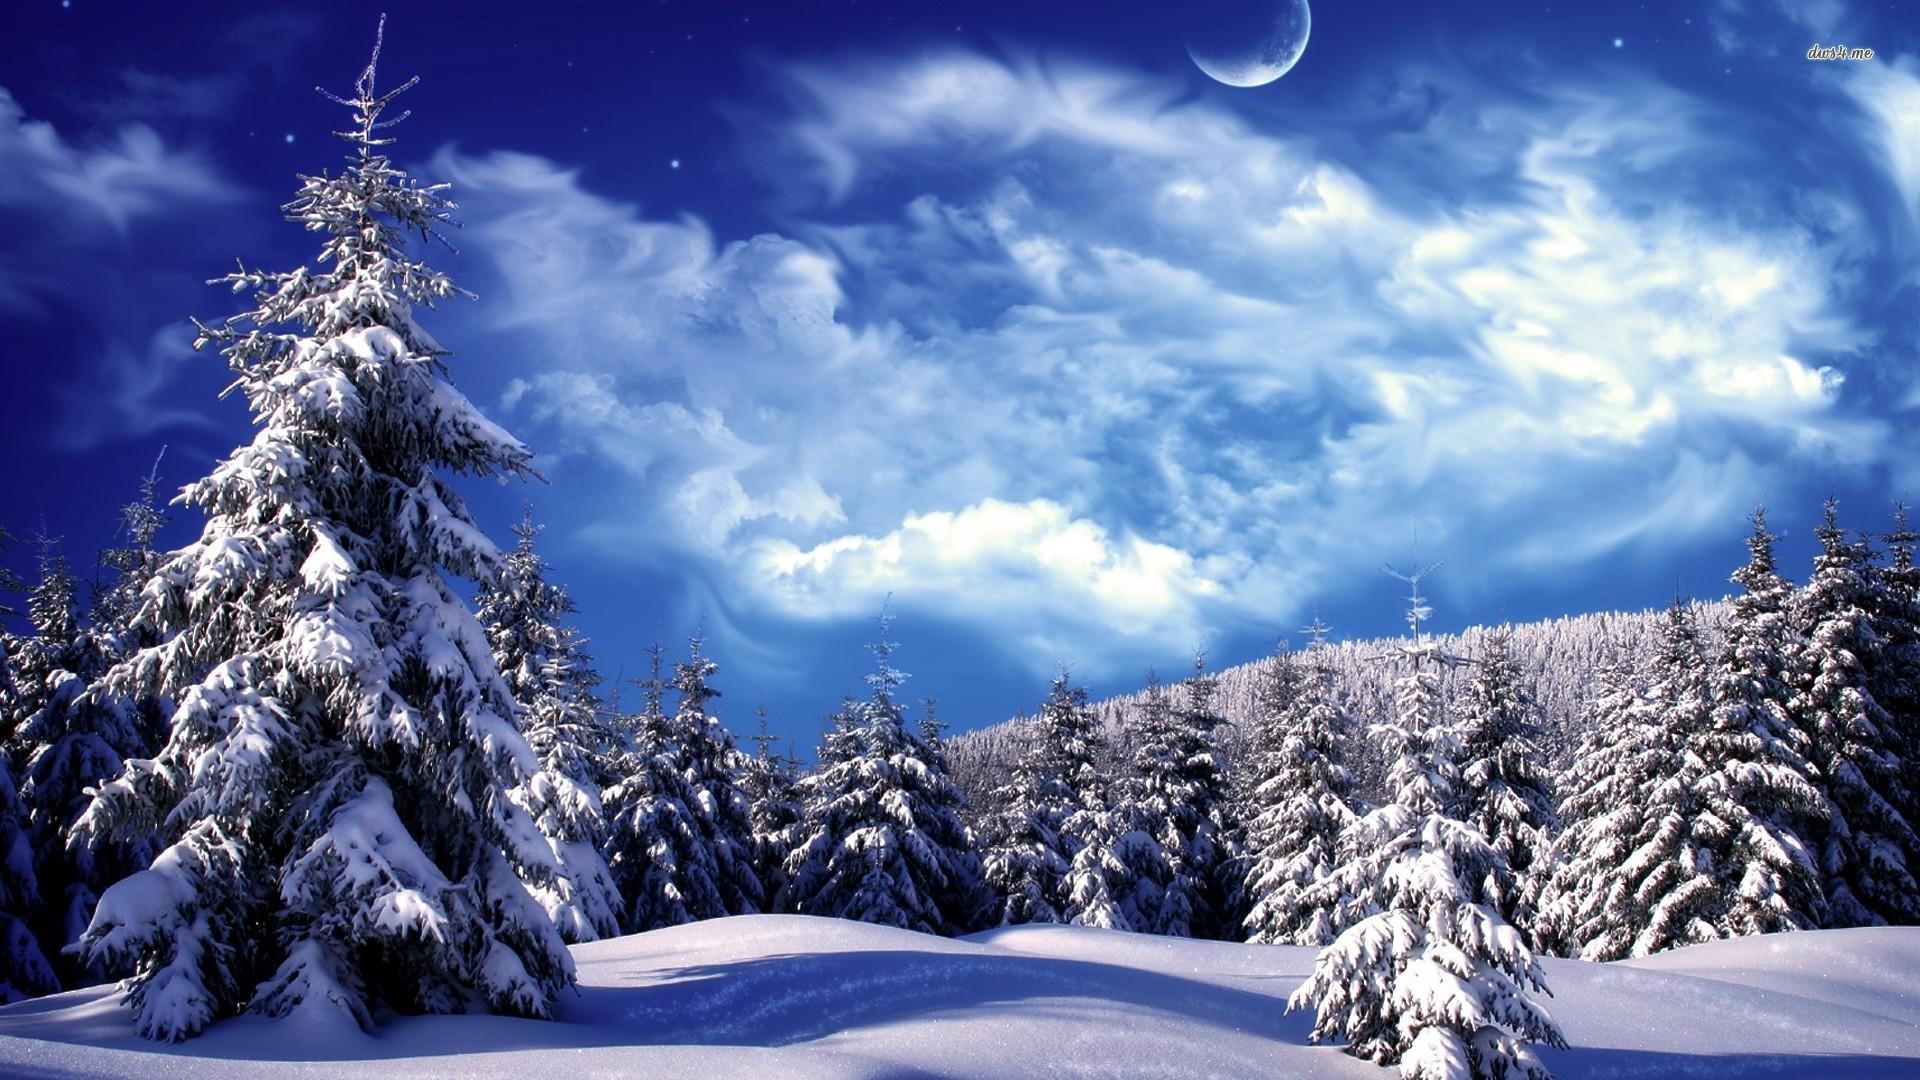 Download Winter Wonderland iPhone Wallpaper, HD Background